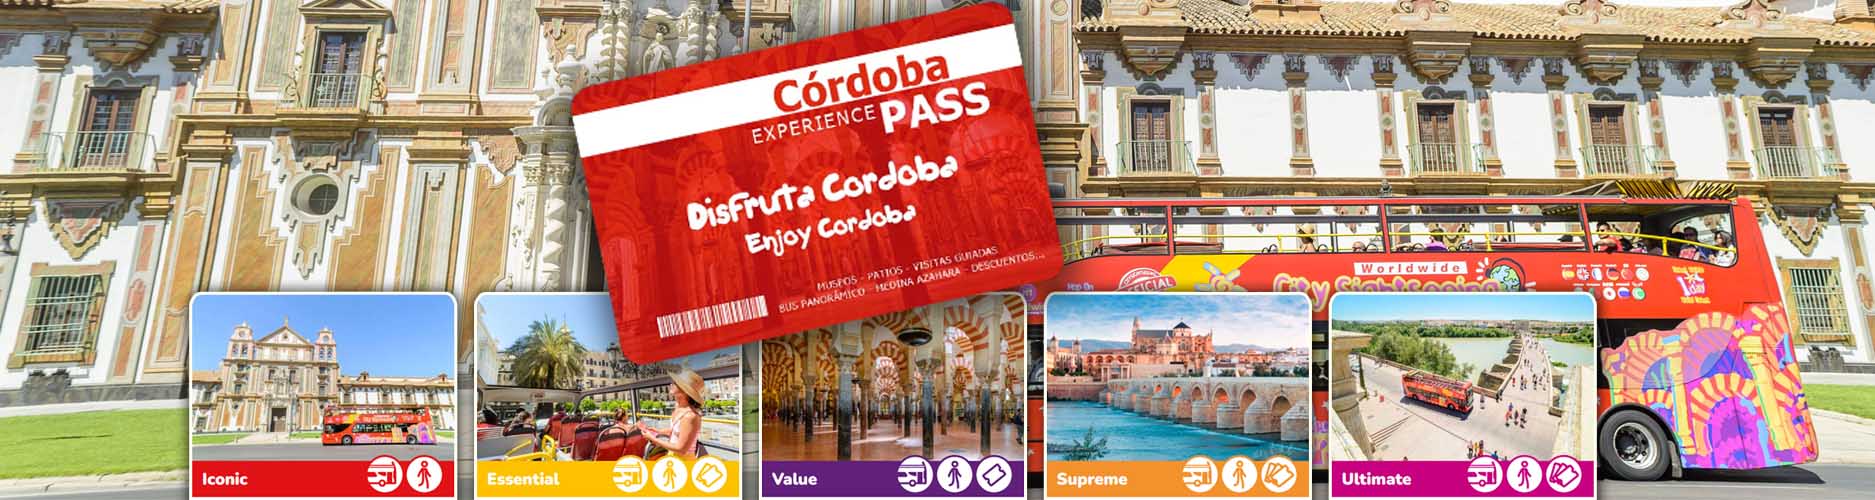 CordobaPASS, visitas guiadas gratis en Córdoba, Entradas a la Mezquita, Espectáculo Ecuestre, Baños Árabes, Medina Azahara y Tours a Ermitas